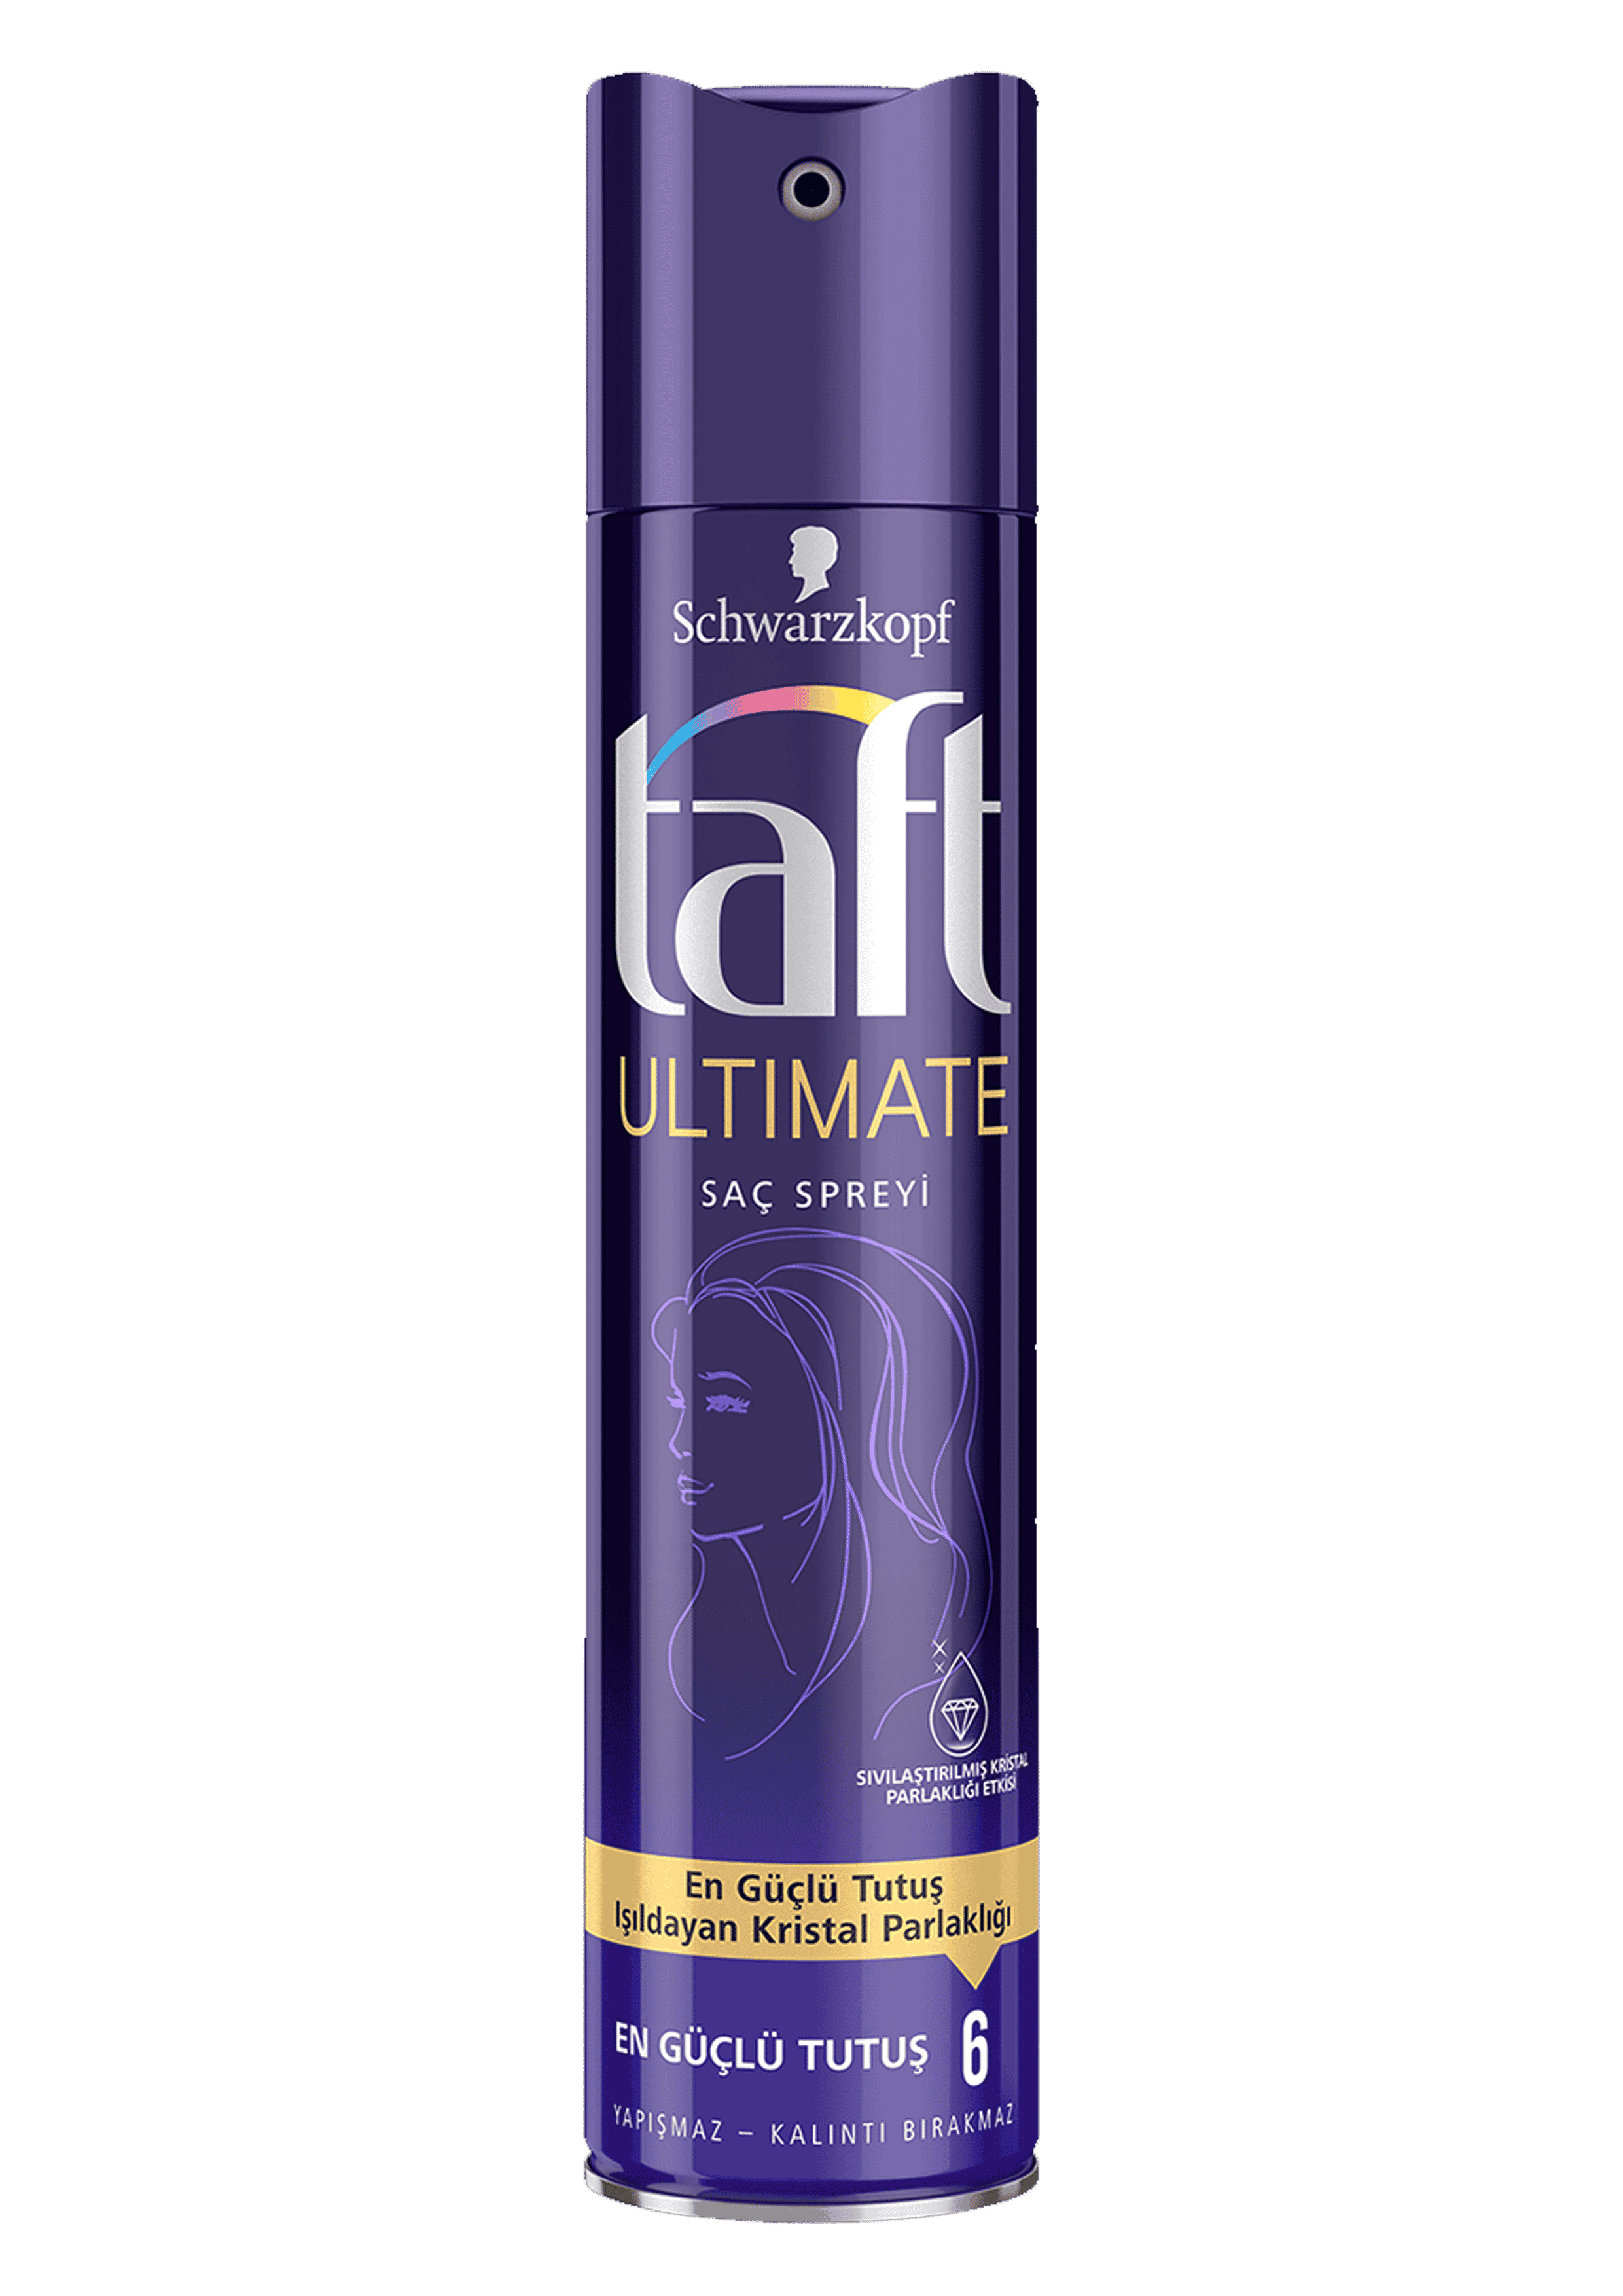 Taft Spray Ultimate 250 ml 